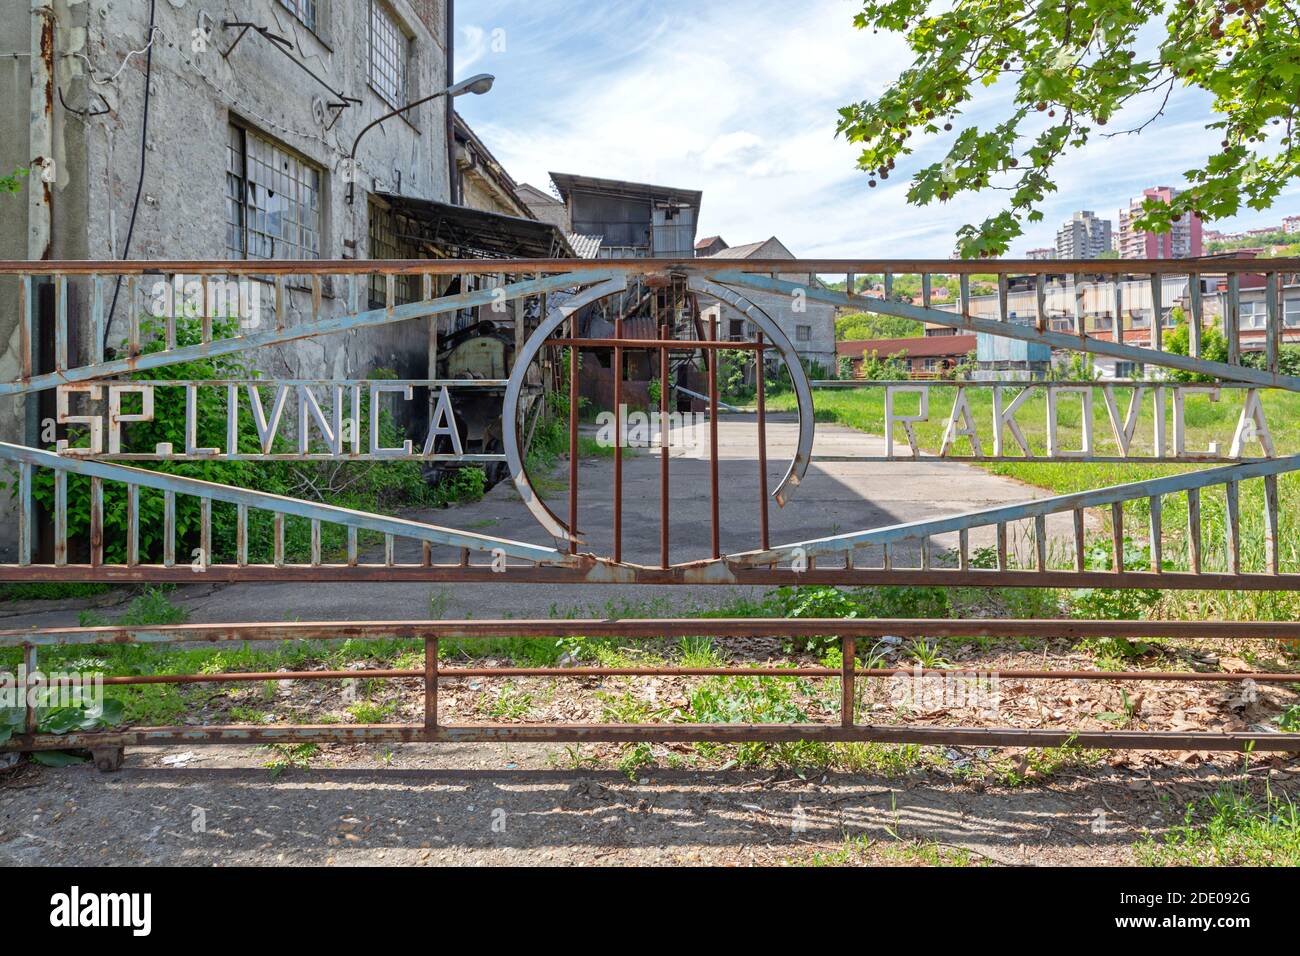 Belgrado, Serbia - 4 maggio 2019: Fonderia d'acciaio abbandonata Sp Livnica Rakovica a Belgrado, Serbia. Foto Stock